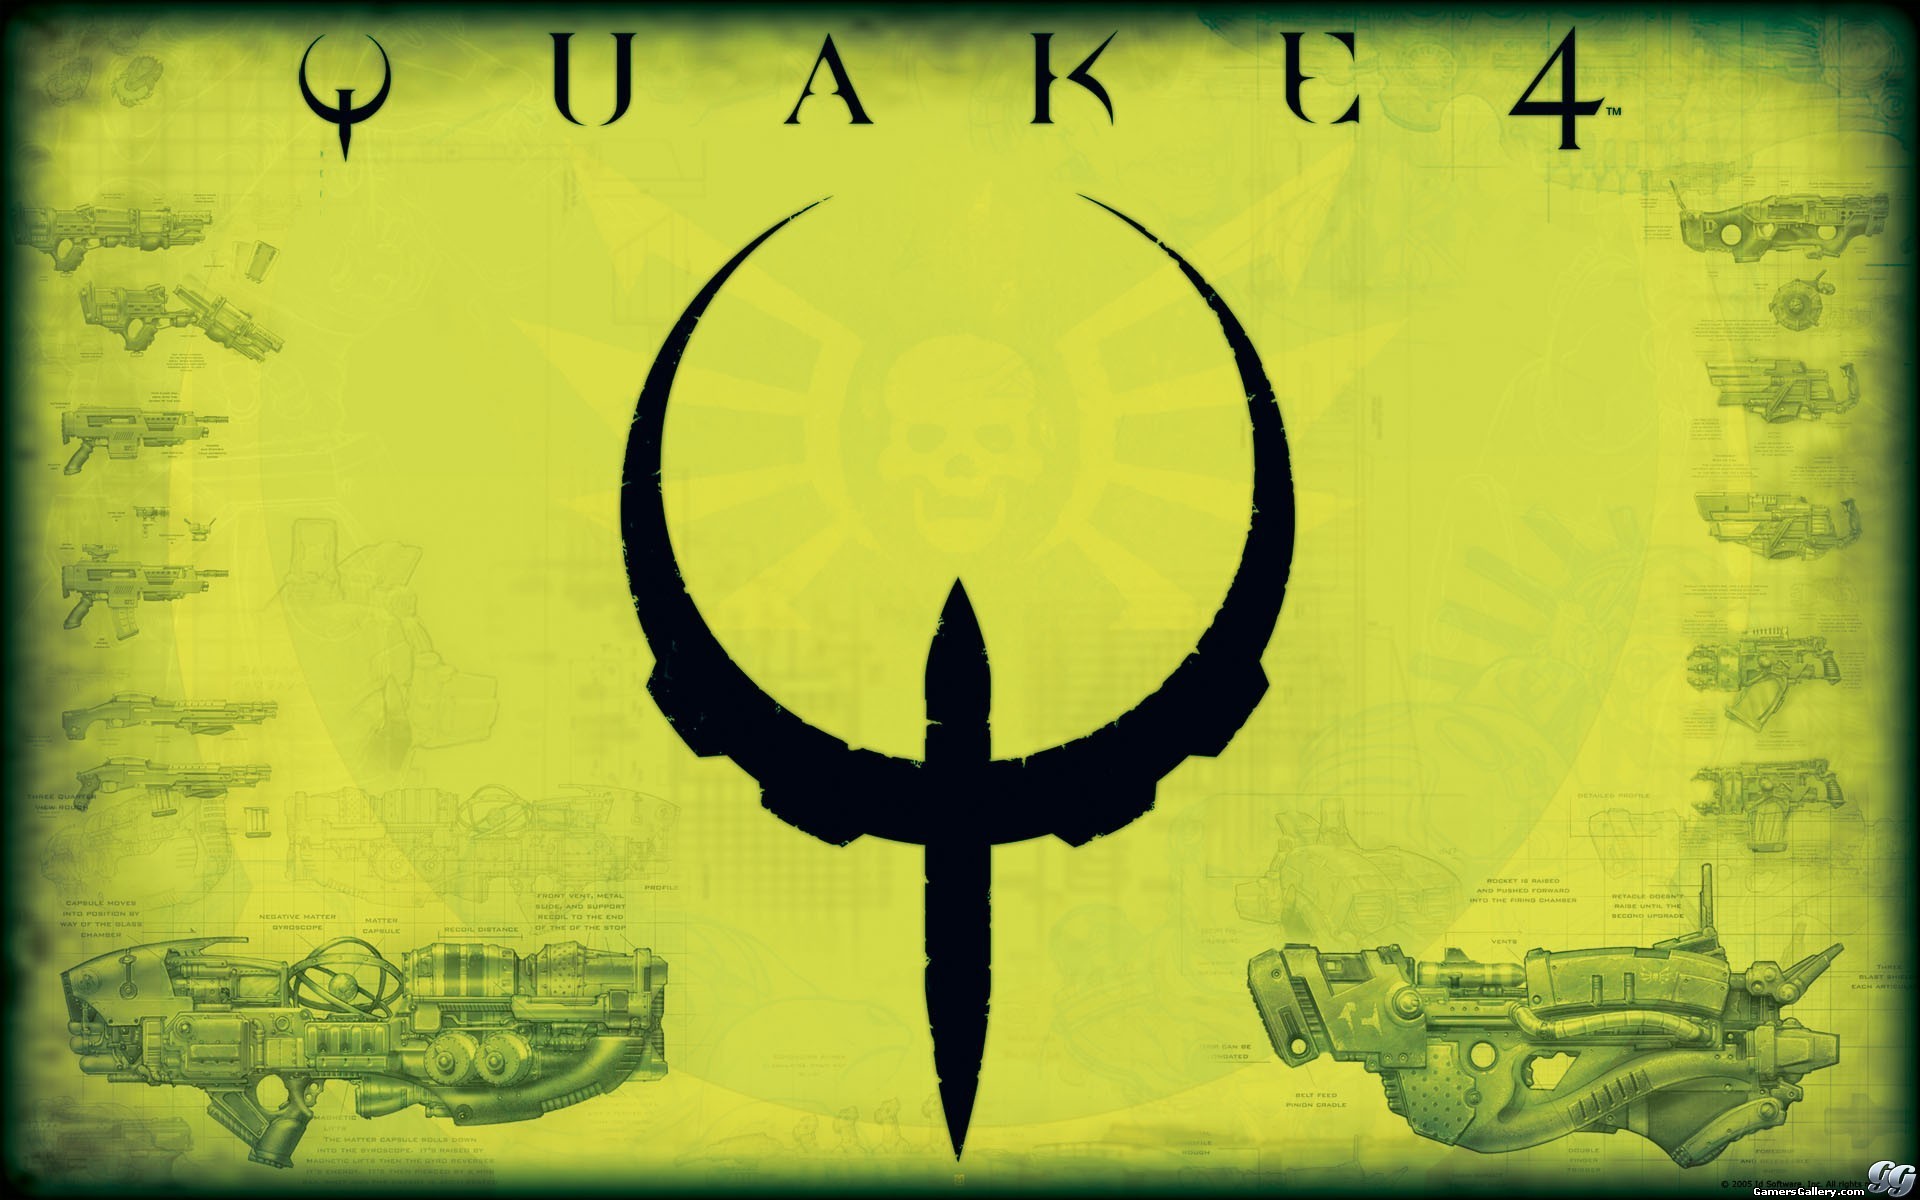 279111 descargar imagen quake 4, videojuego, quake: fondos de pantalla y protectores de pantalla gratis